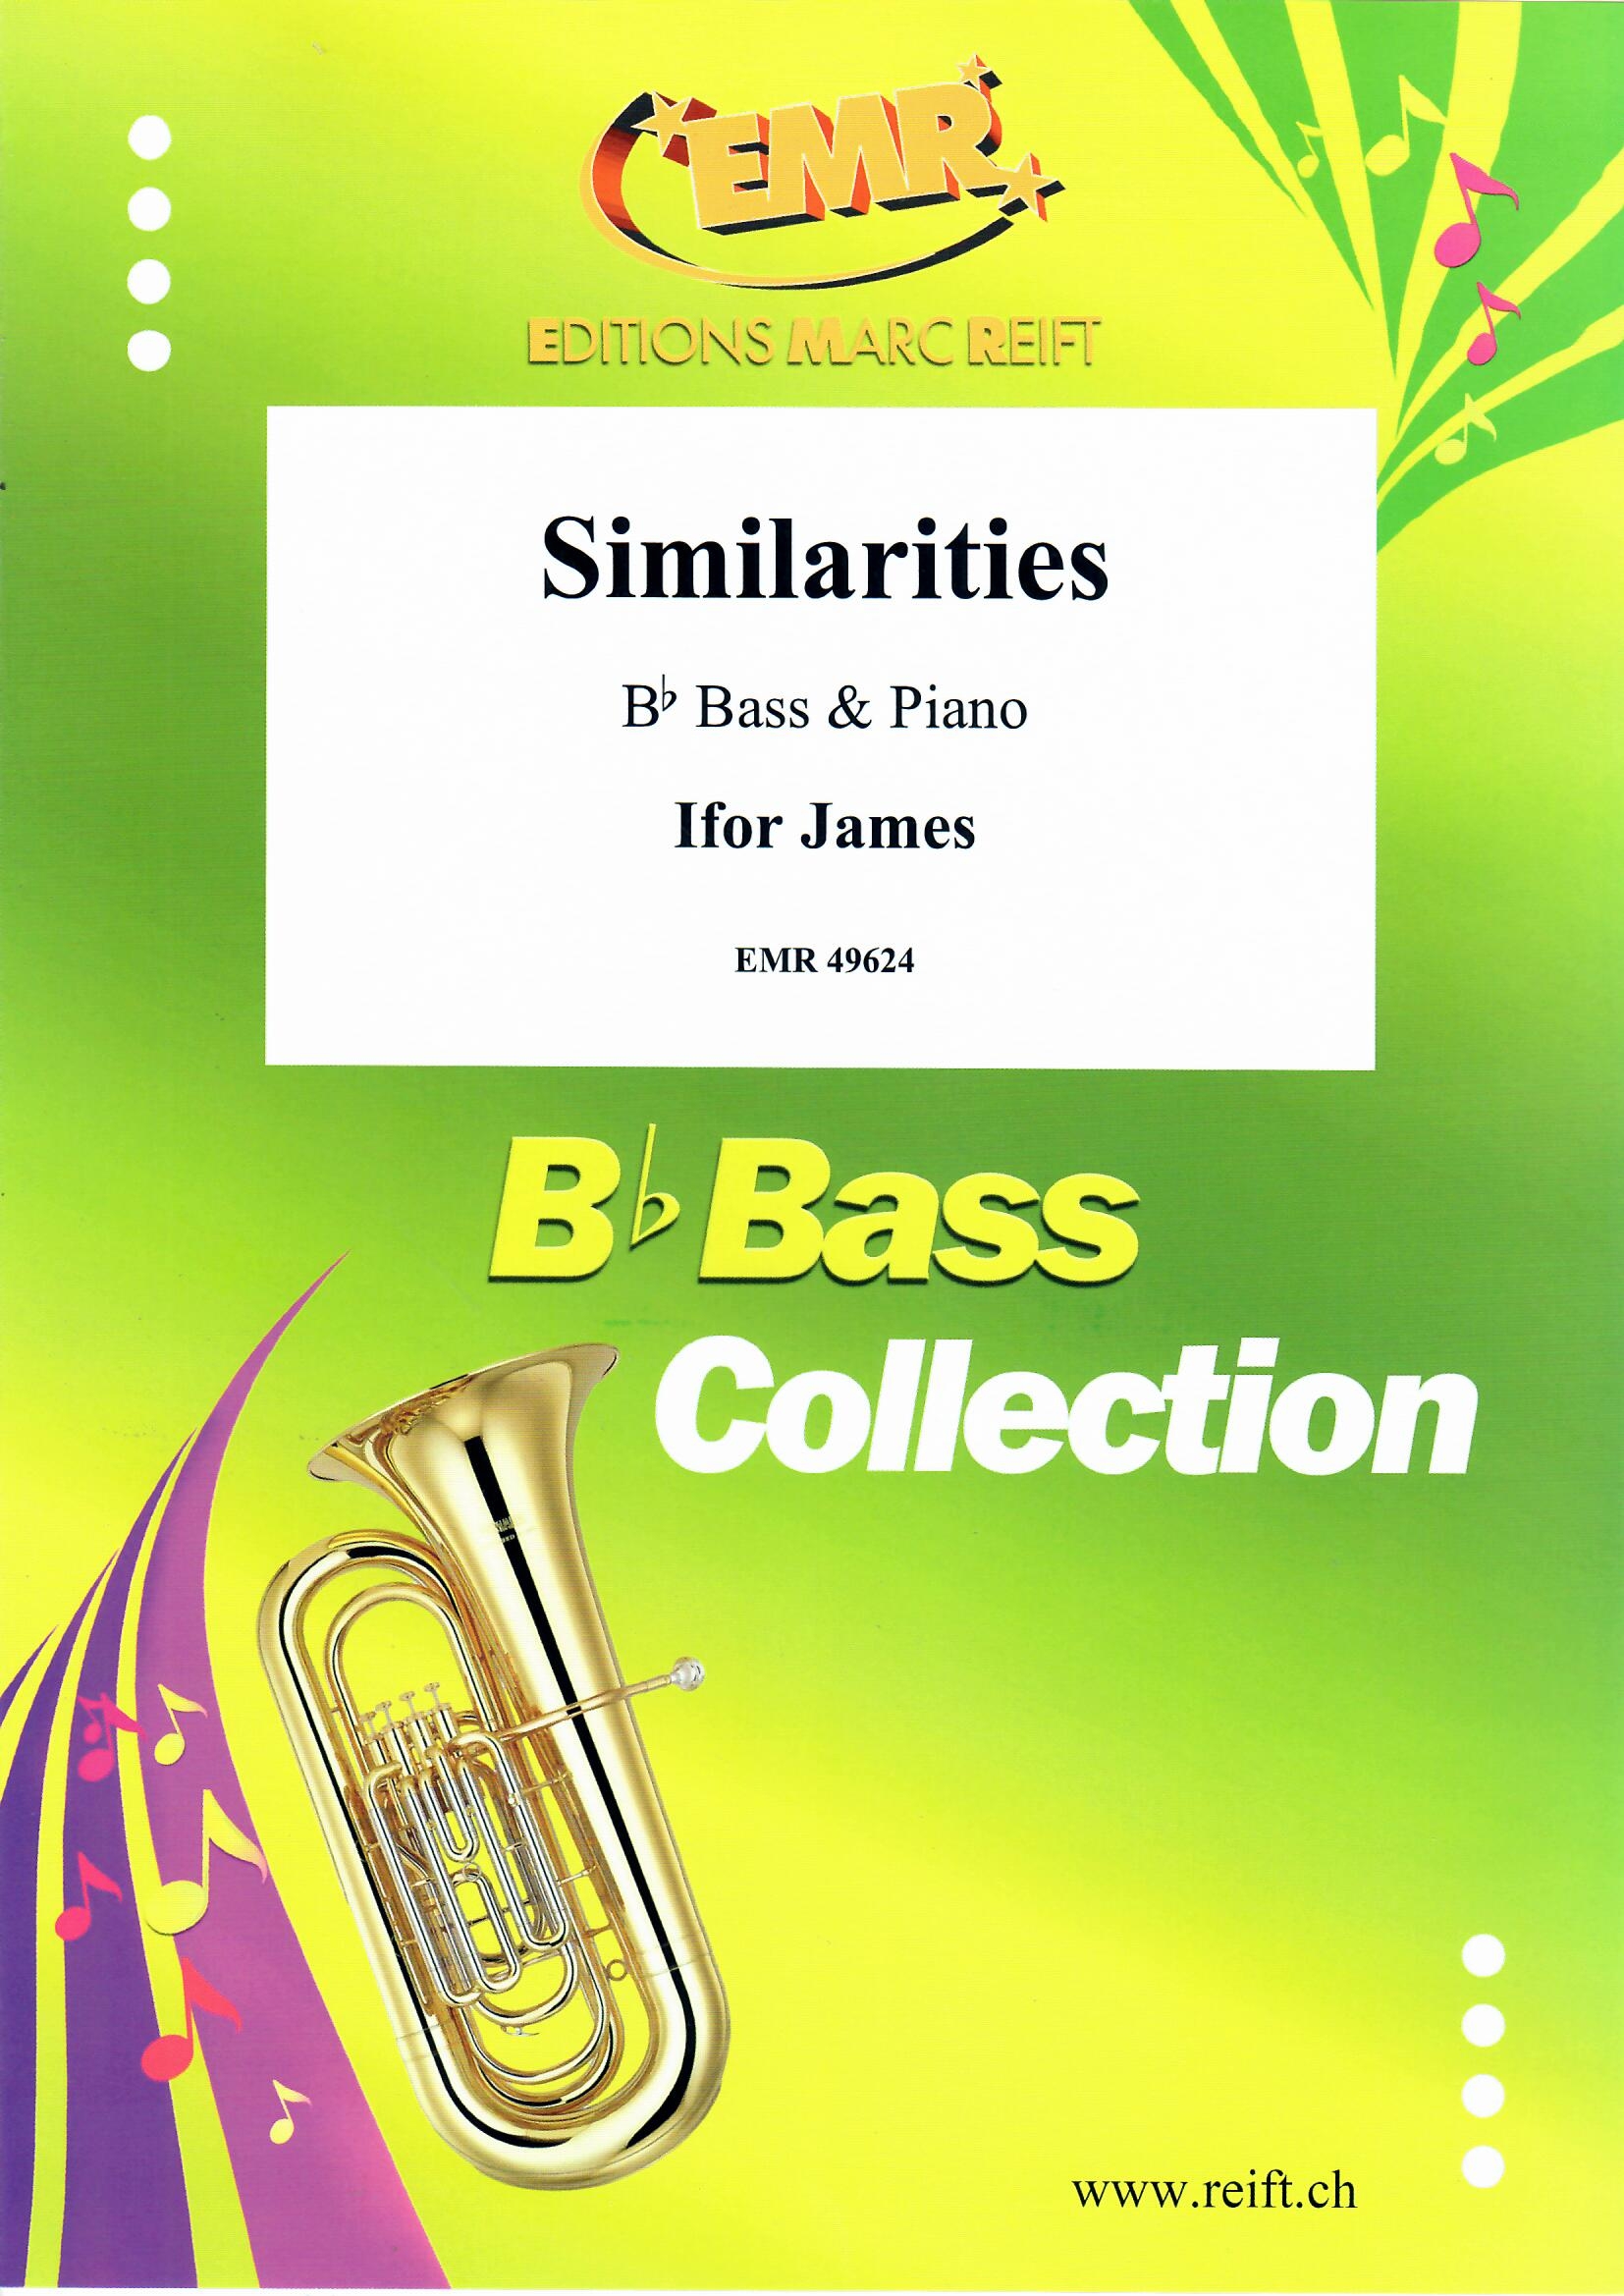 SIMILARITIES, NEW & RECENT Publications, SOLOS - B♭. Bass